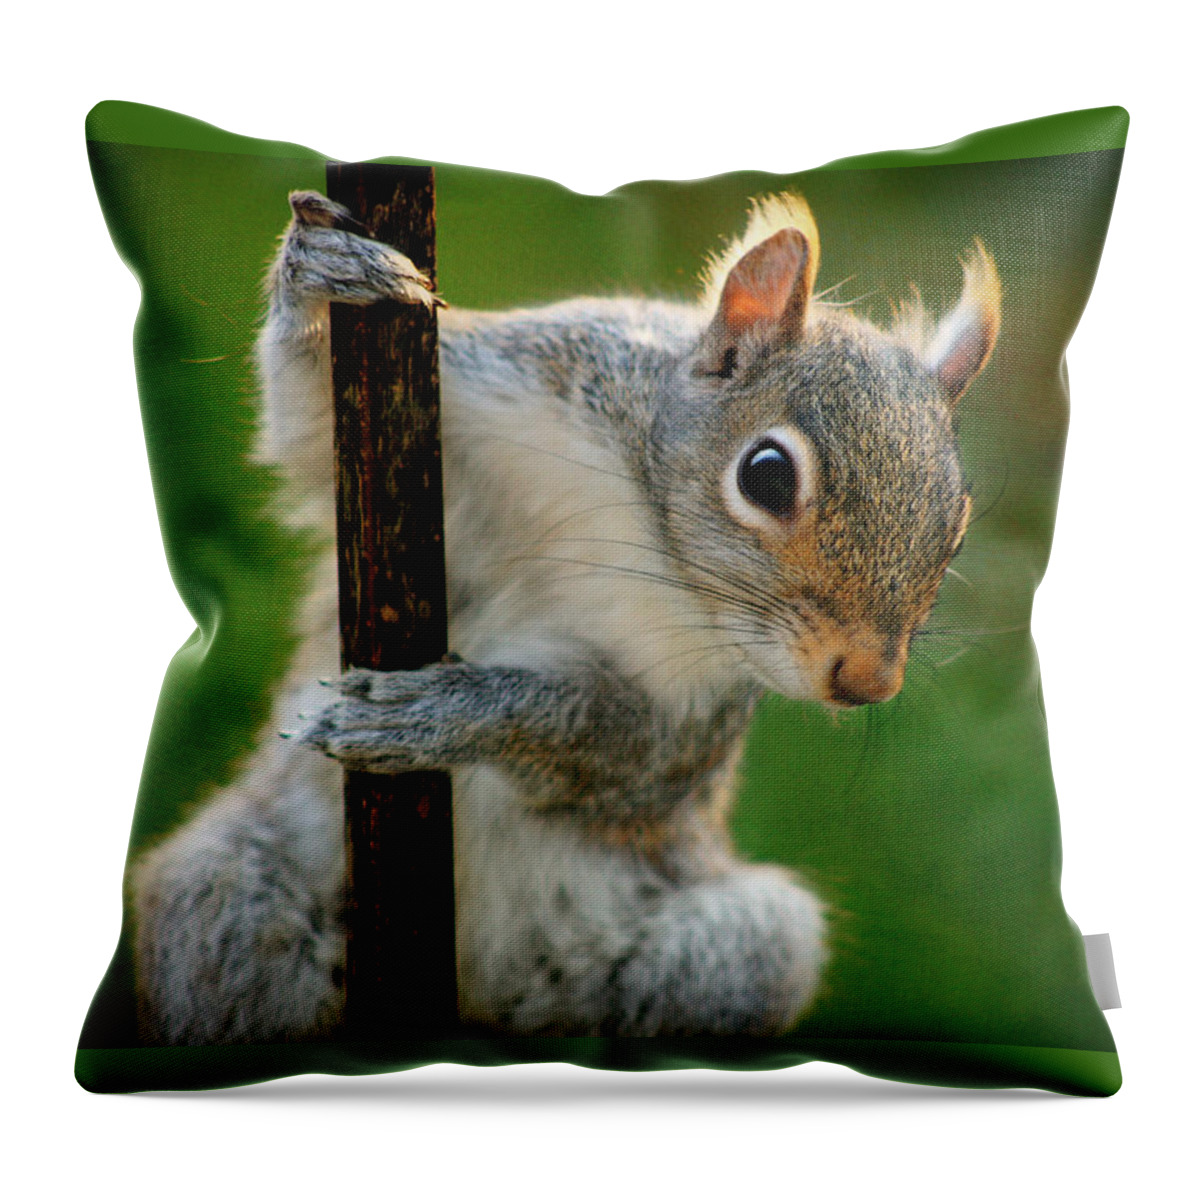 Climbing Squirrel Throw Pillow featuring the photograph Climbing Squirrel by Susan McMenamin